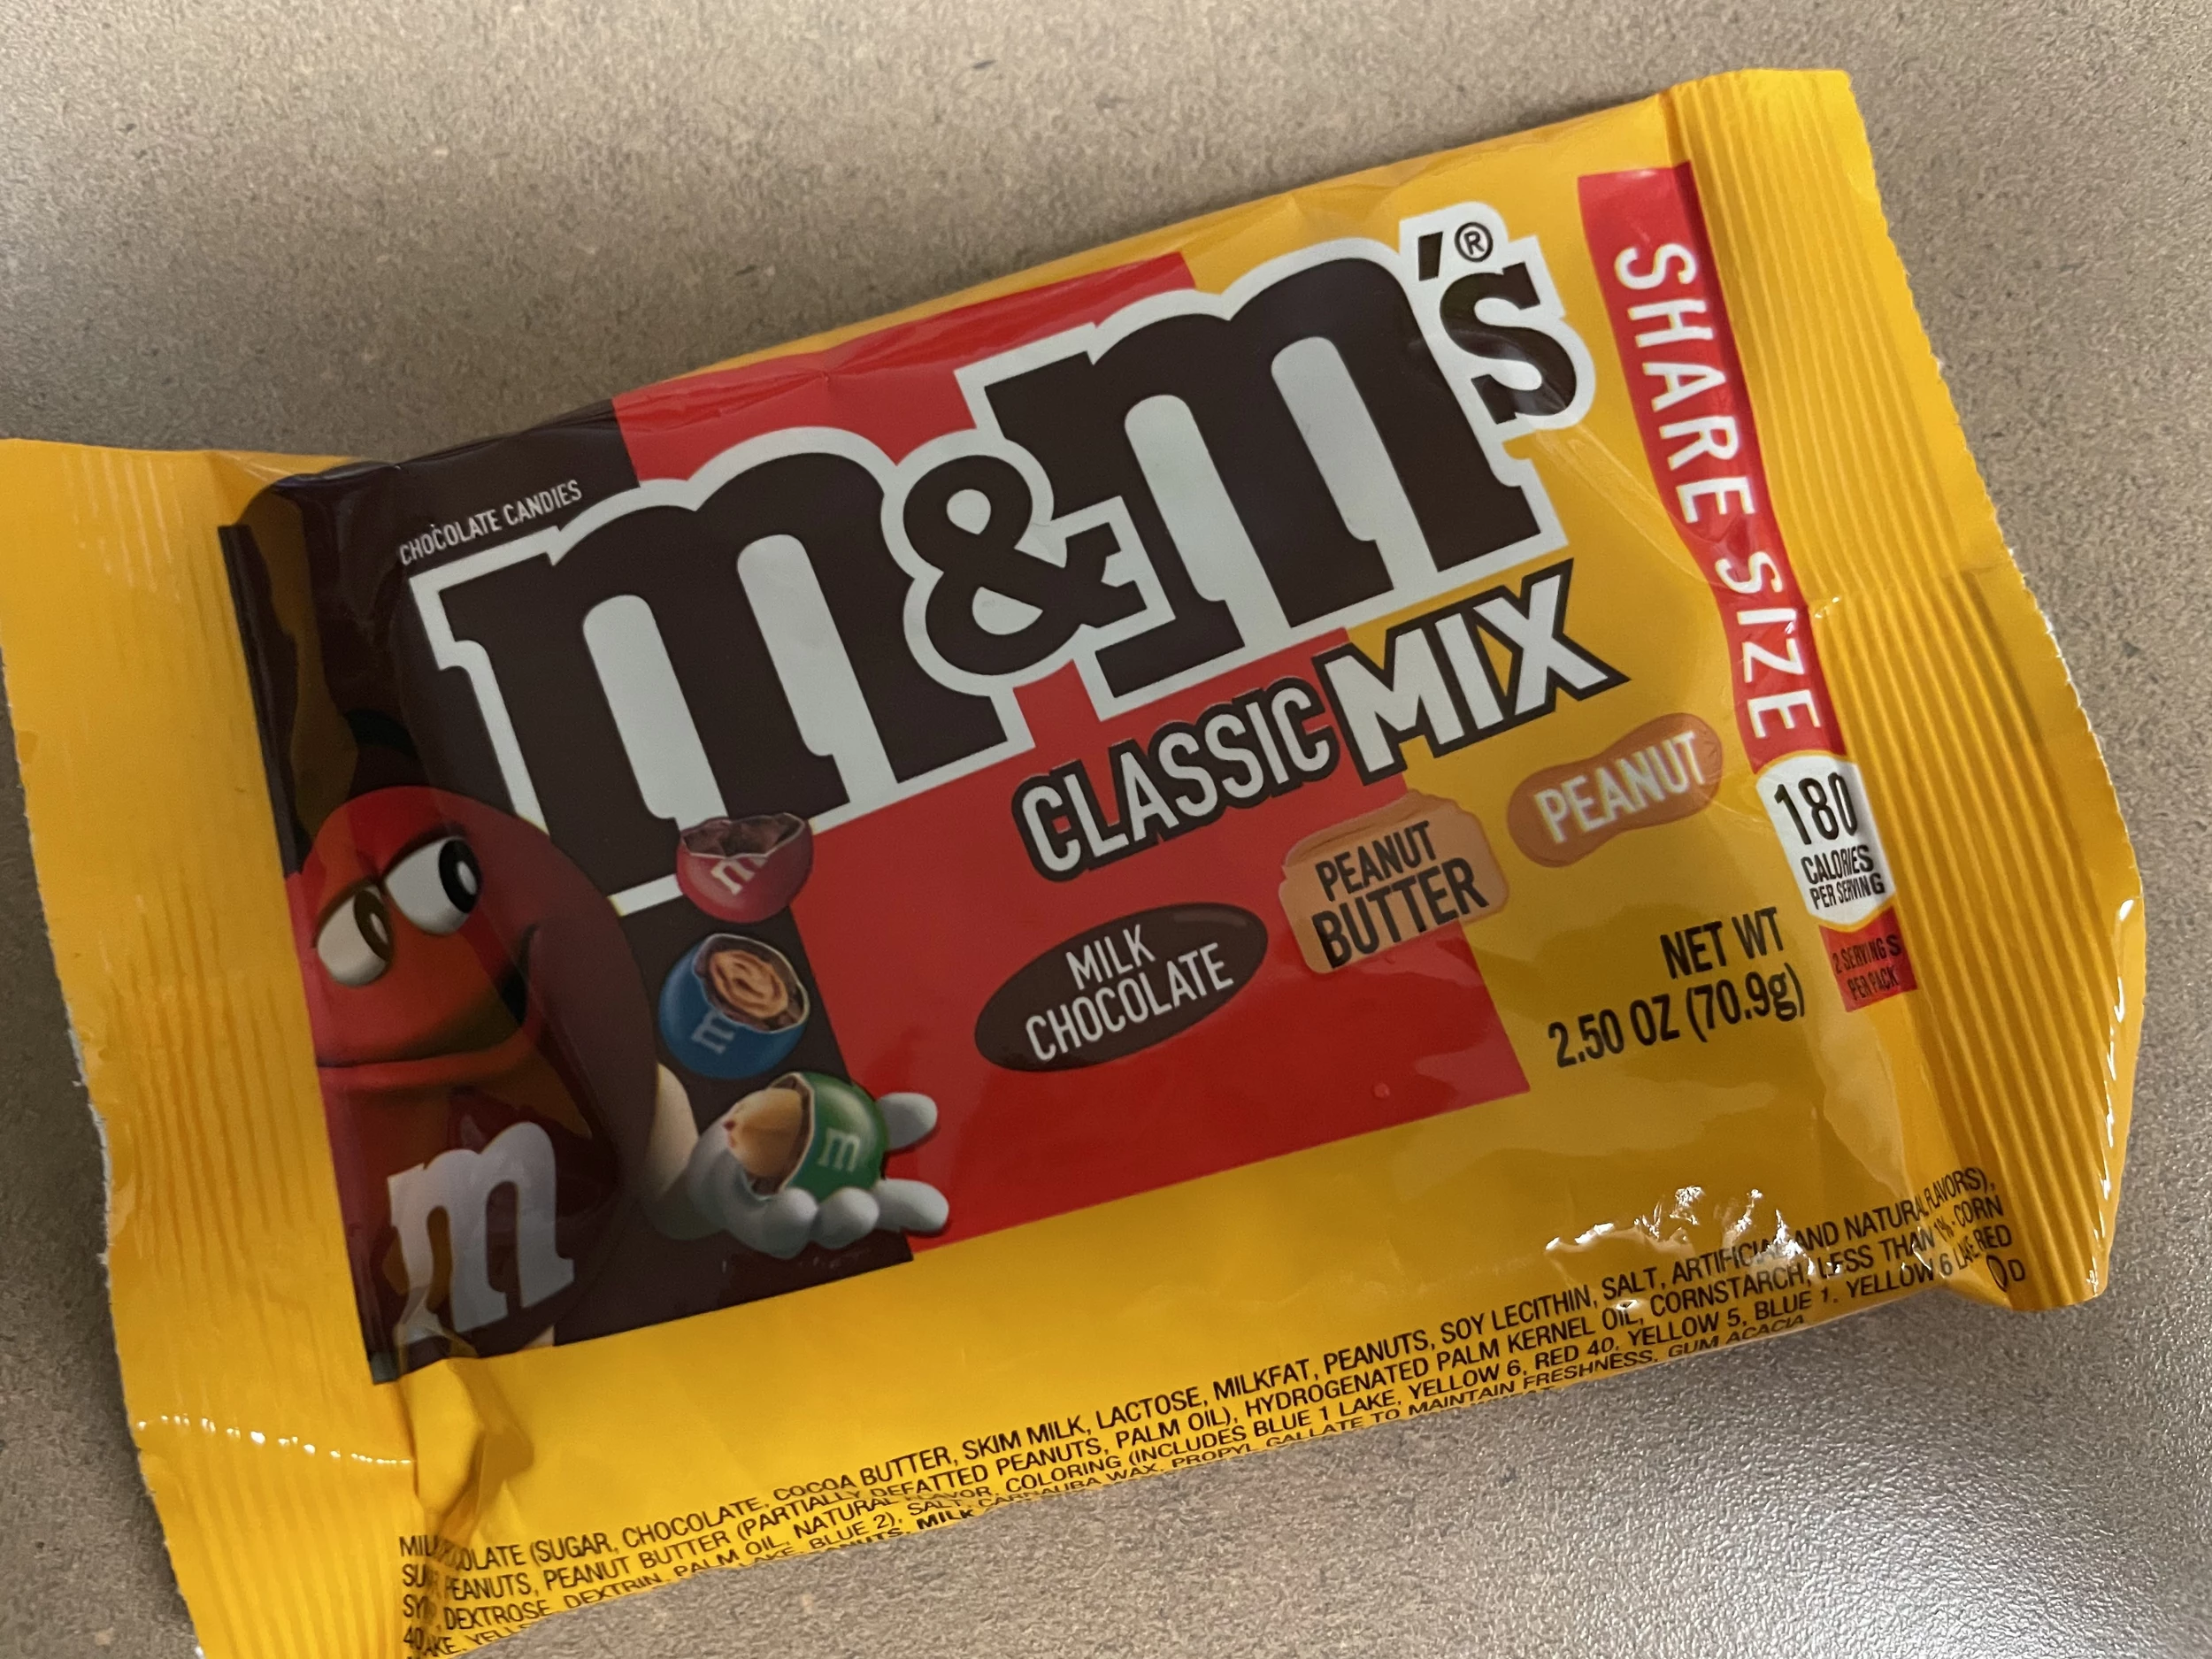 M&M's Peanut Mix Share Size, 8.3 Oz.